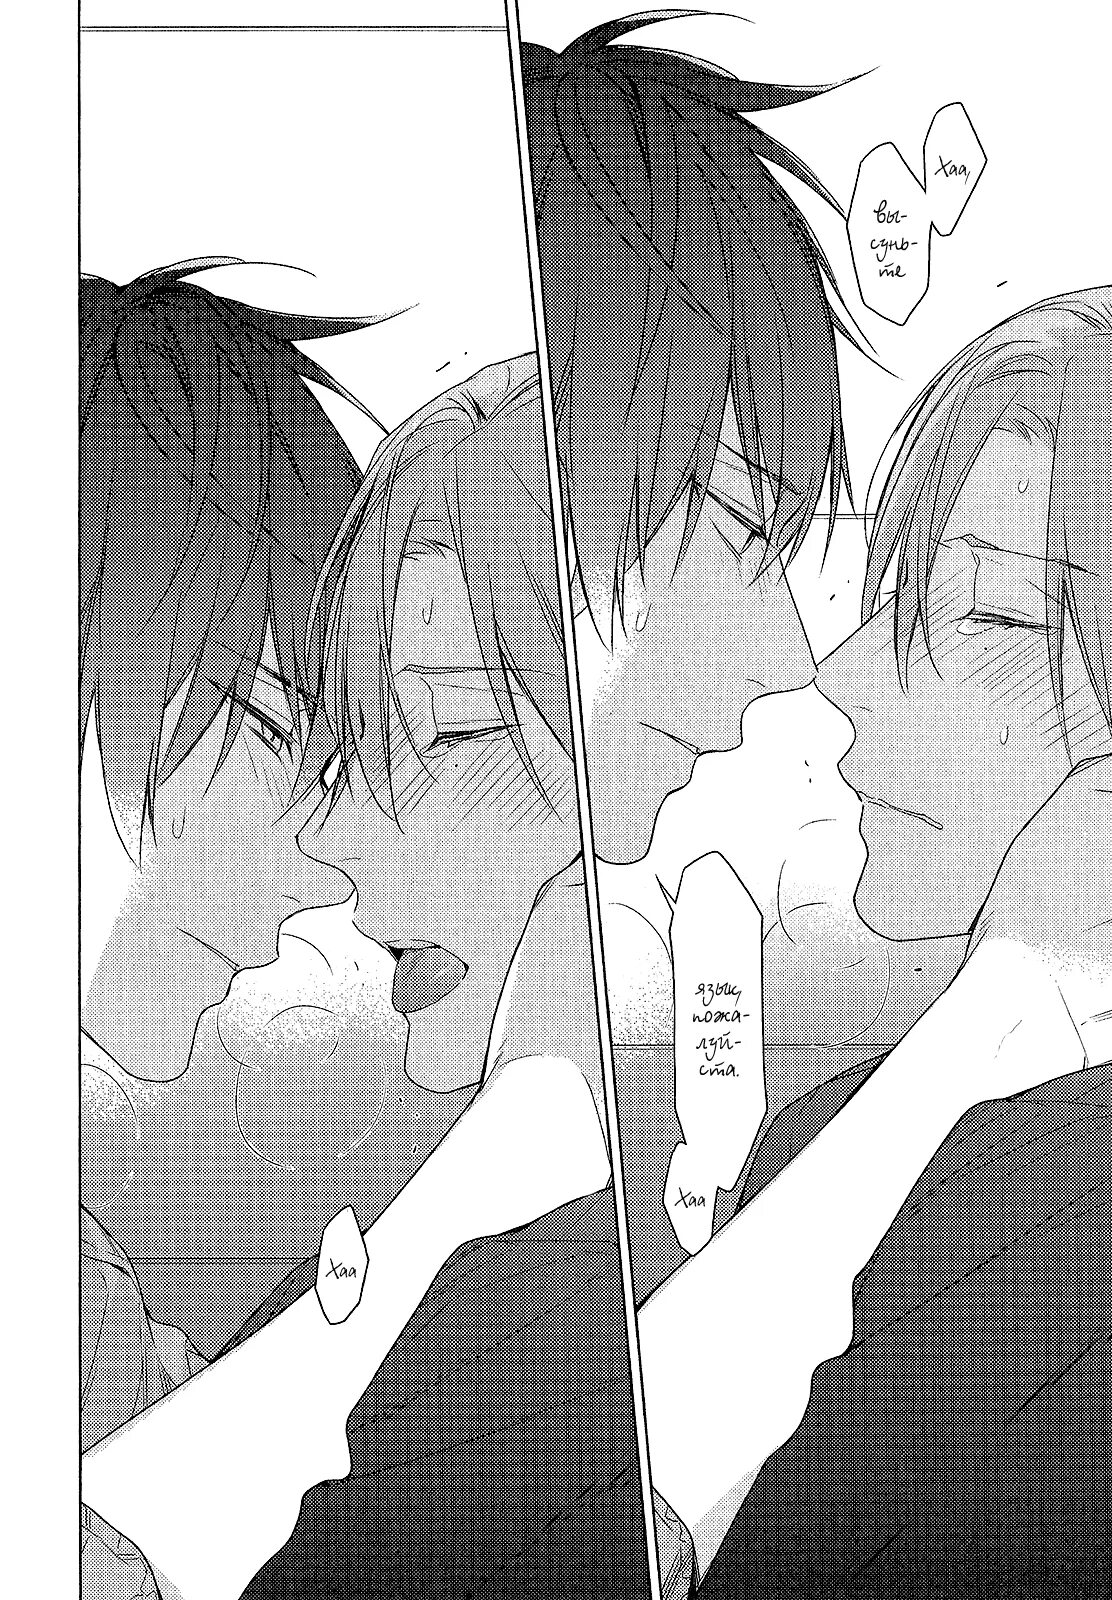 Manga Yaoi до десяти. Куросе Рику и Широтани Тадаоми поцелуй. До десяти / ten count. Перевод яой манги